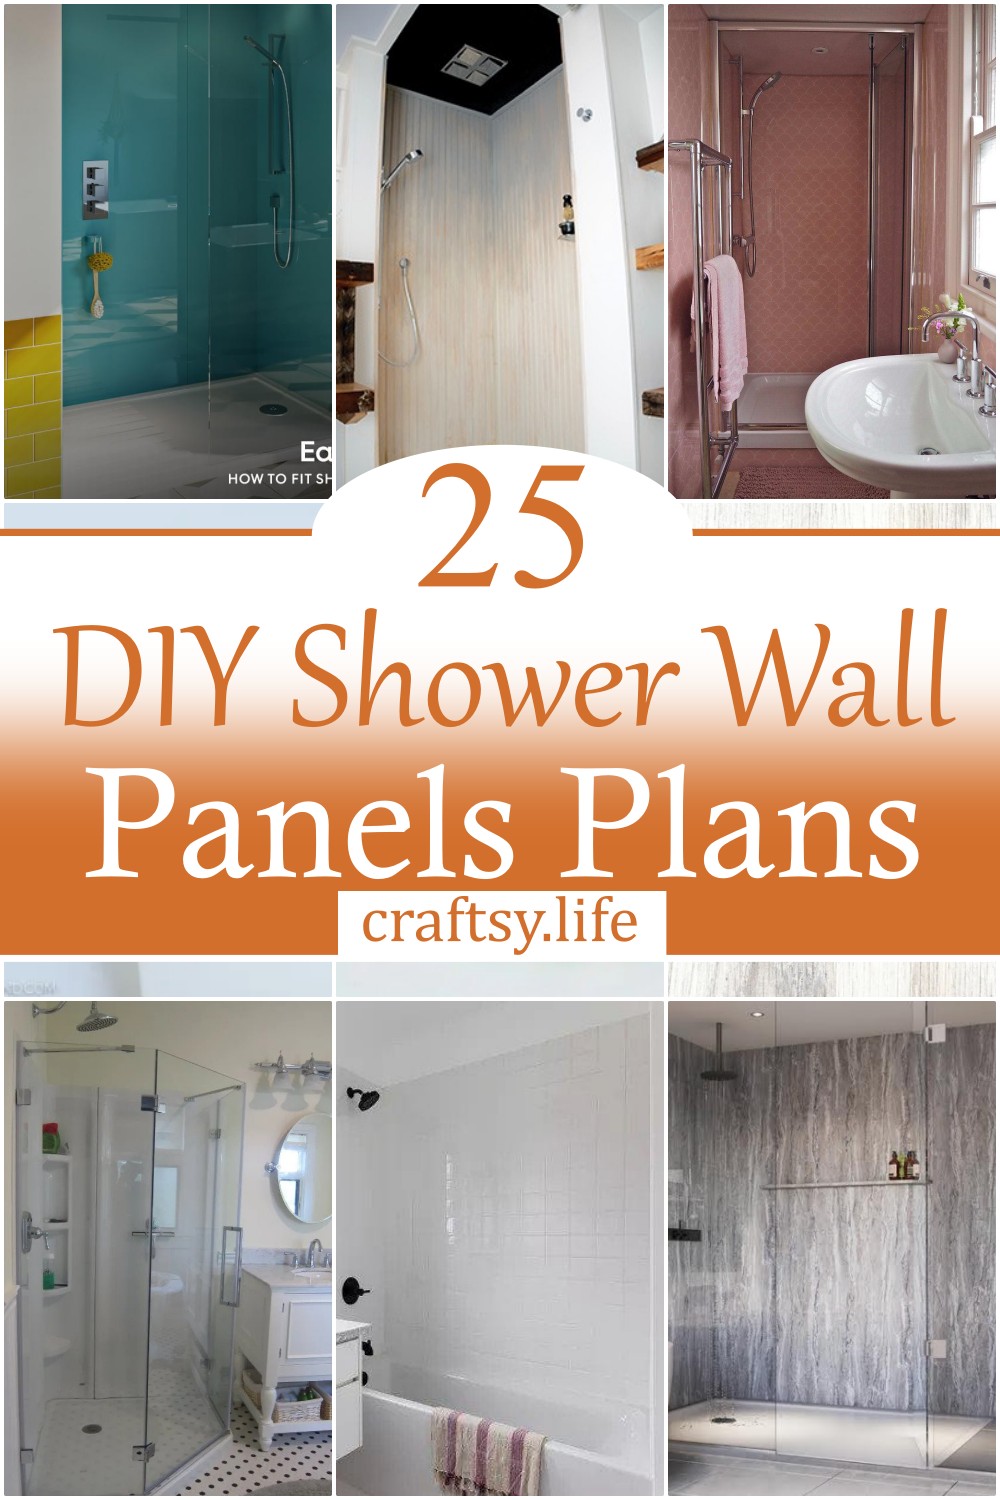 DIY Shower Wall Panels Plans